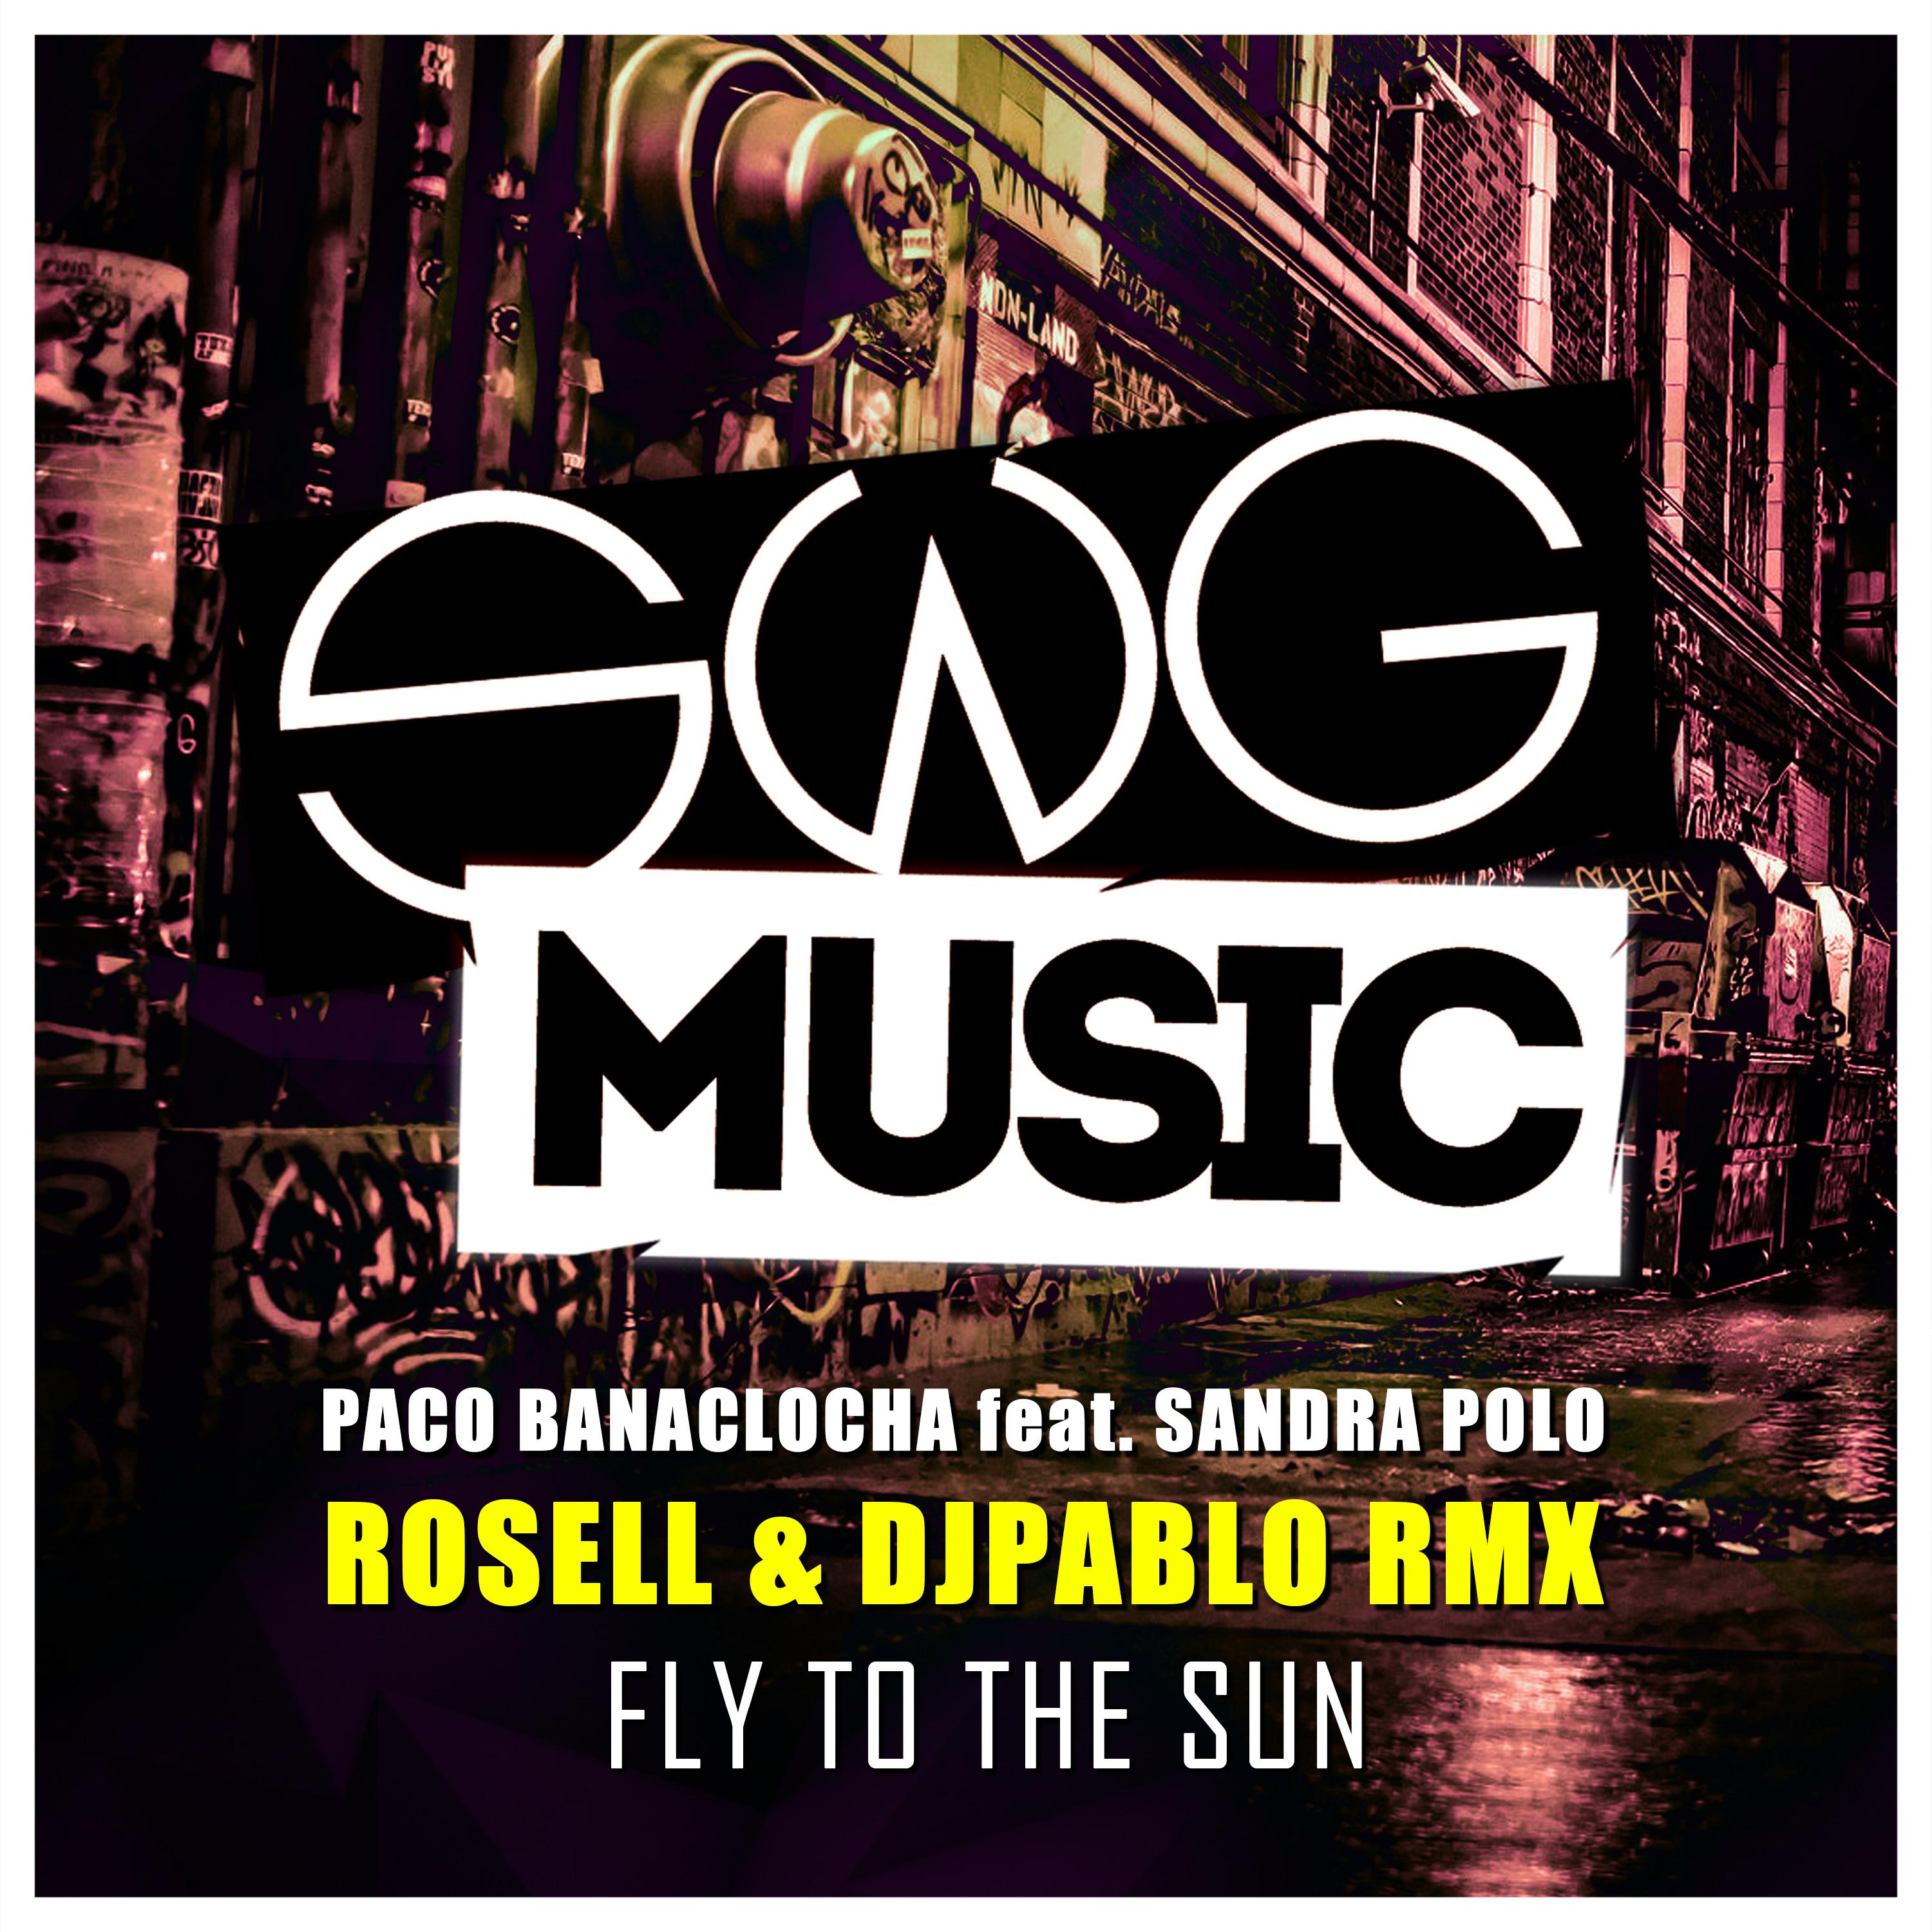 fly to the sun (rosell & djpablo rmx)